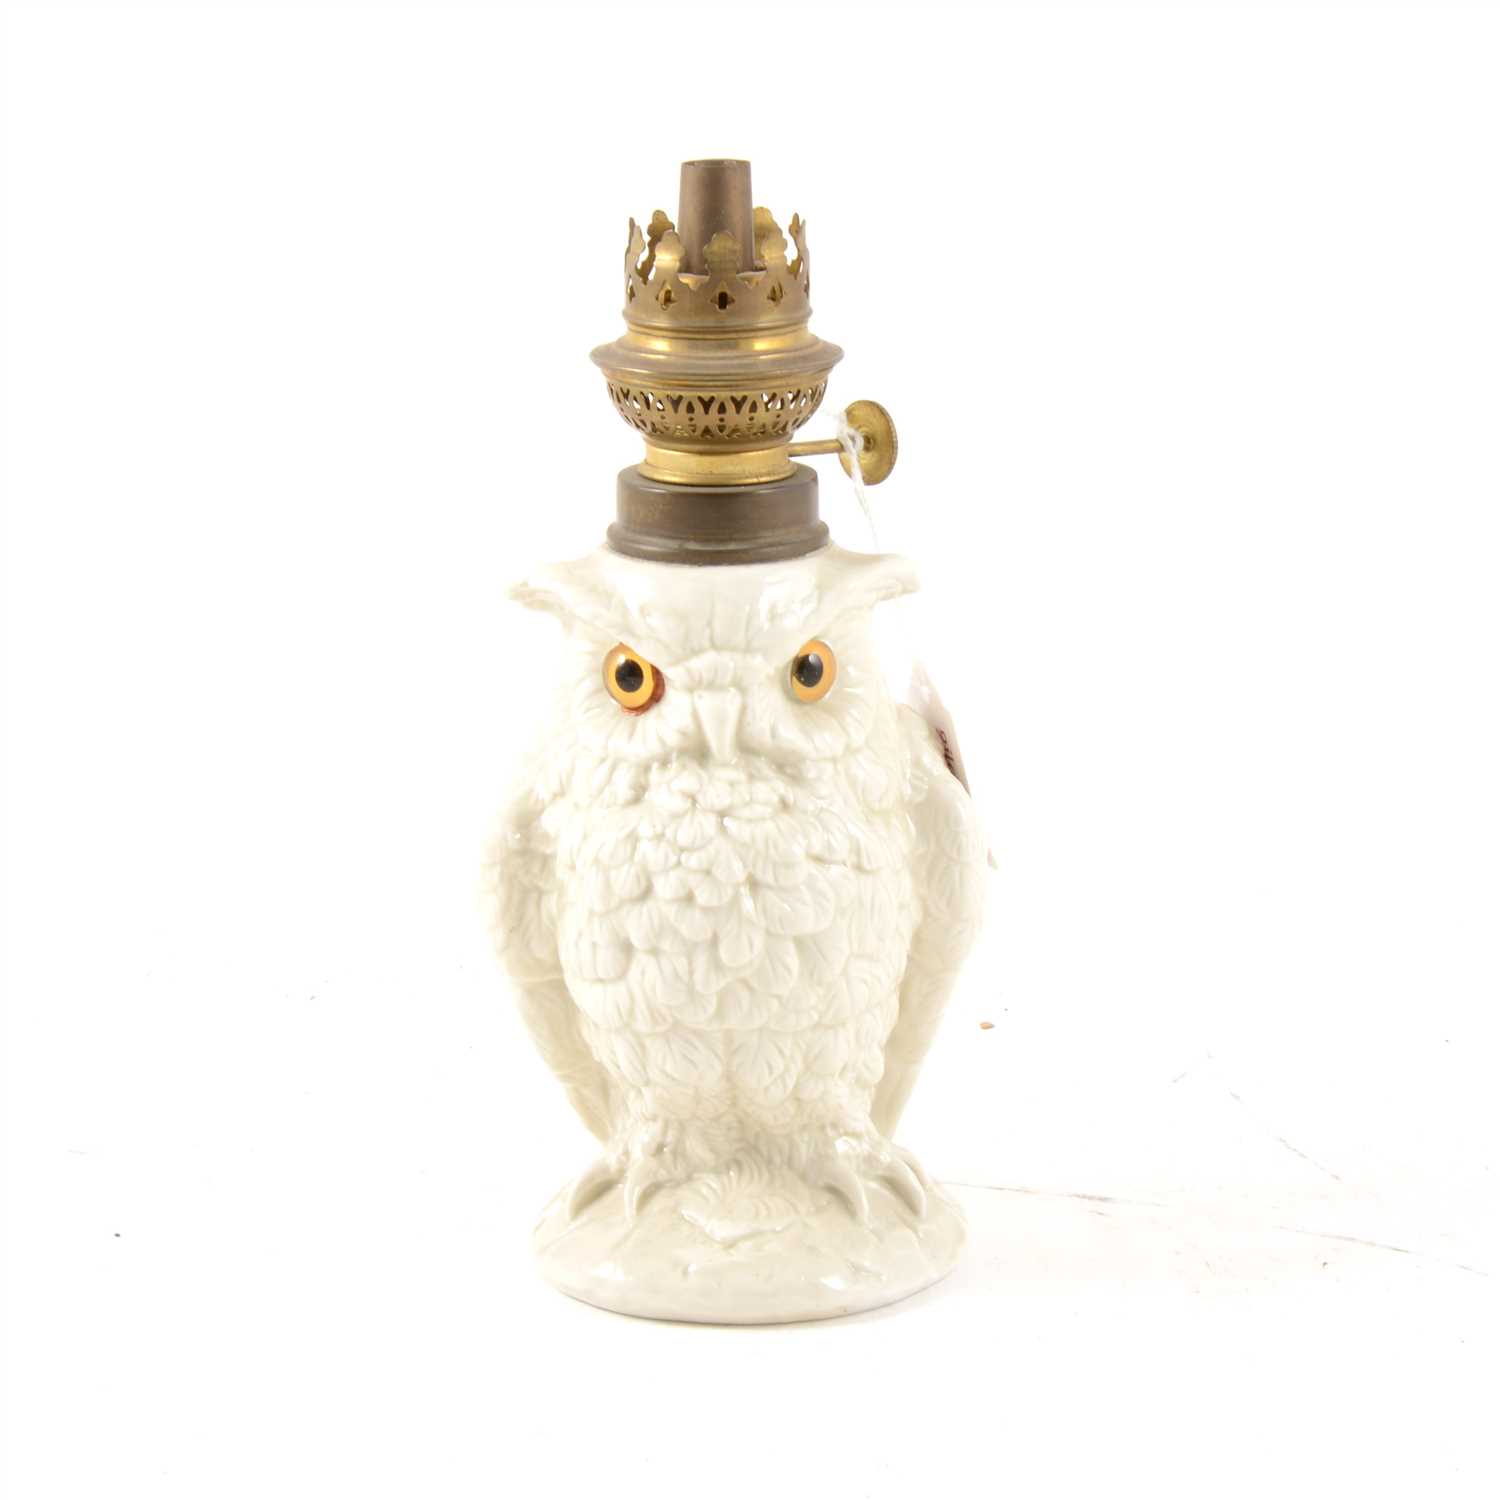 Lot 2 - Edwardian porcelain nursery oil lamp, in the form of an owl